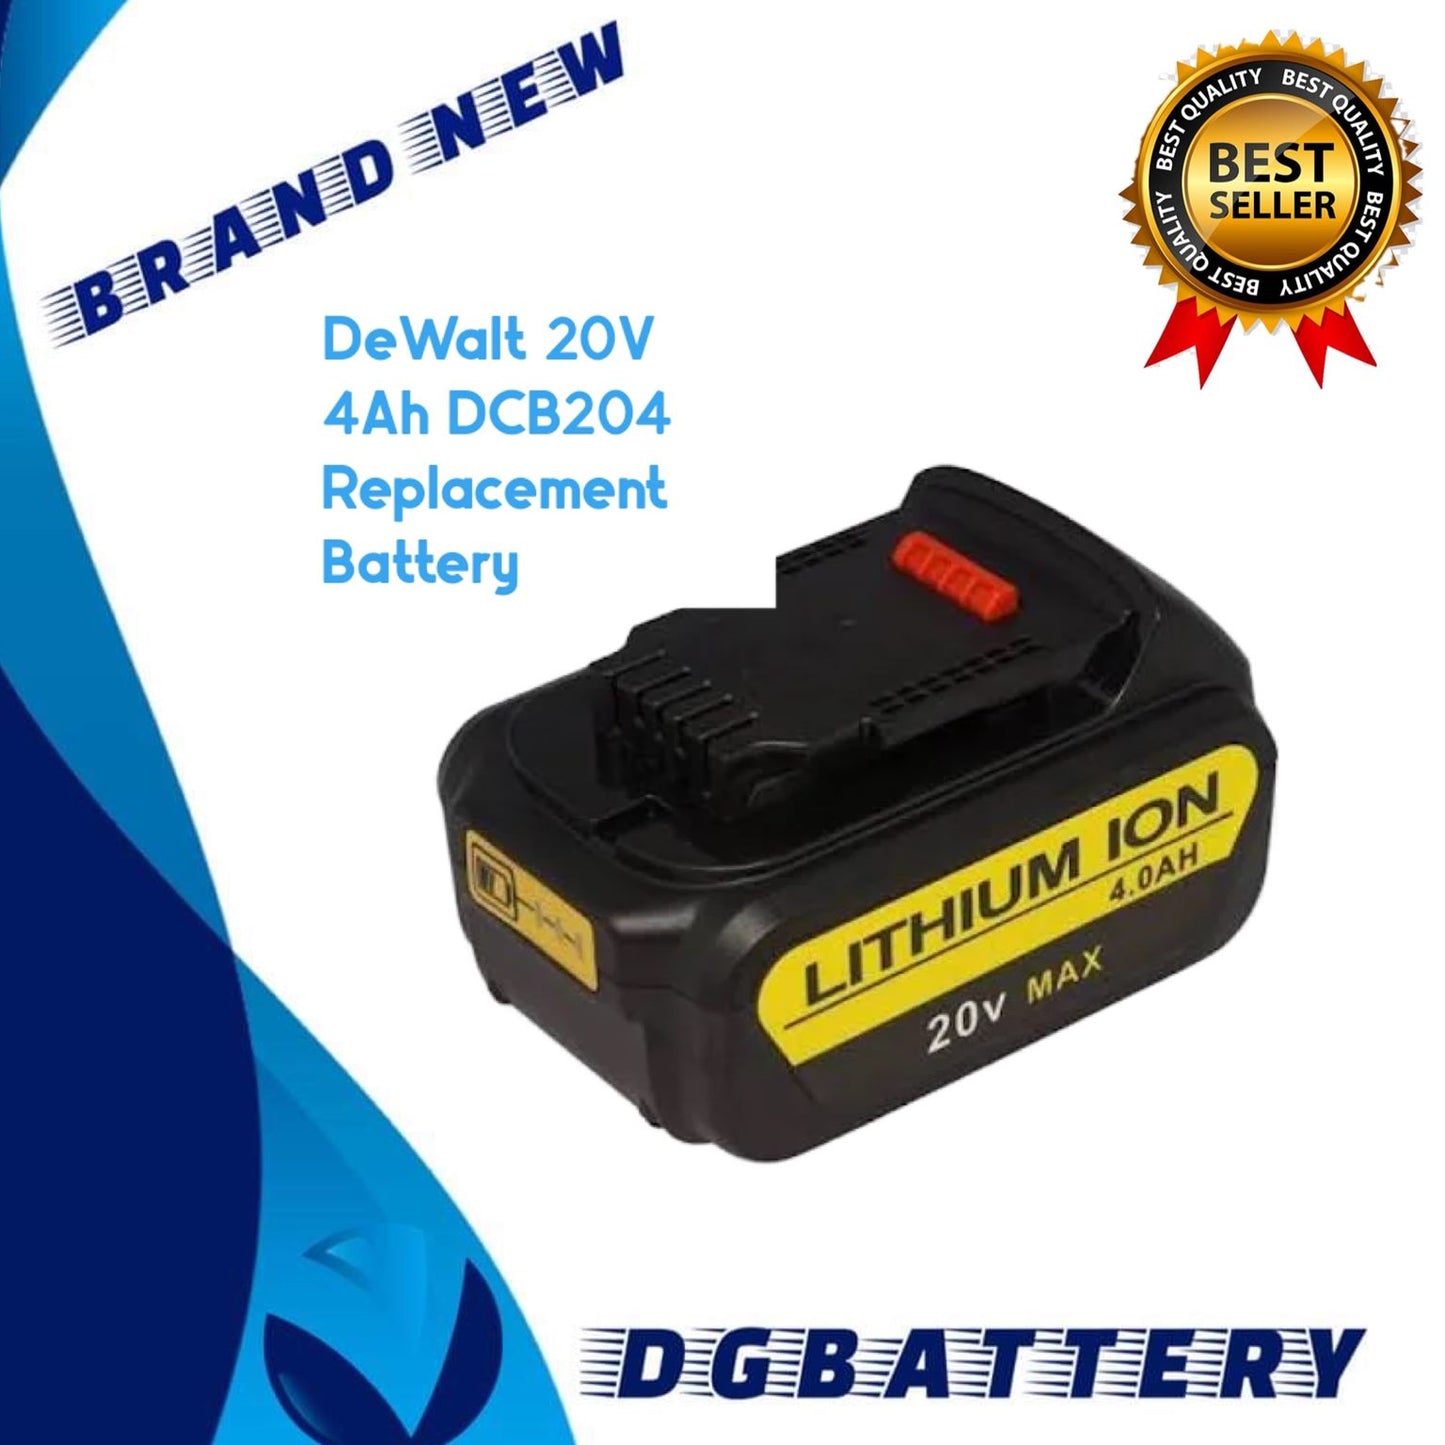 18V XR 20V MAX Li-ion Battery for Dewalt DCB182 DCB200 DCB200-2